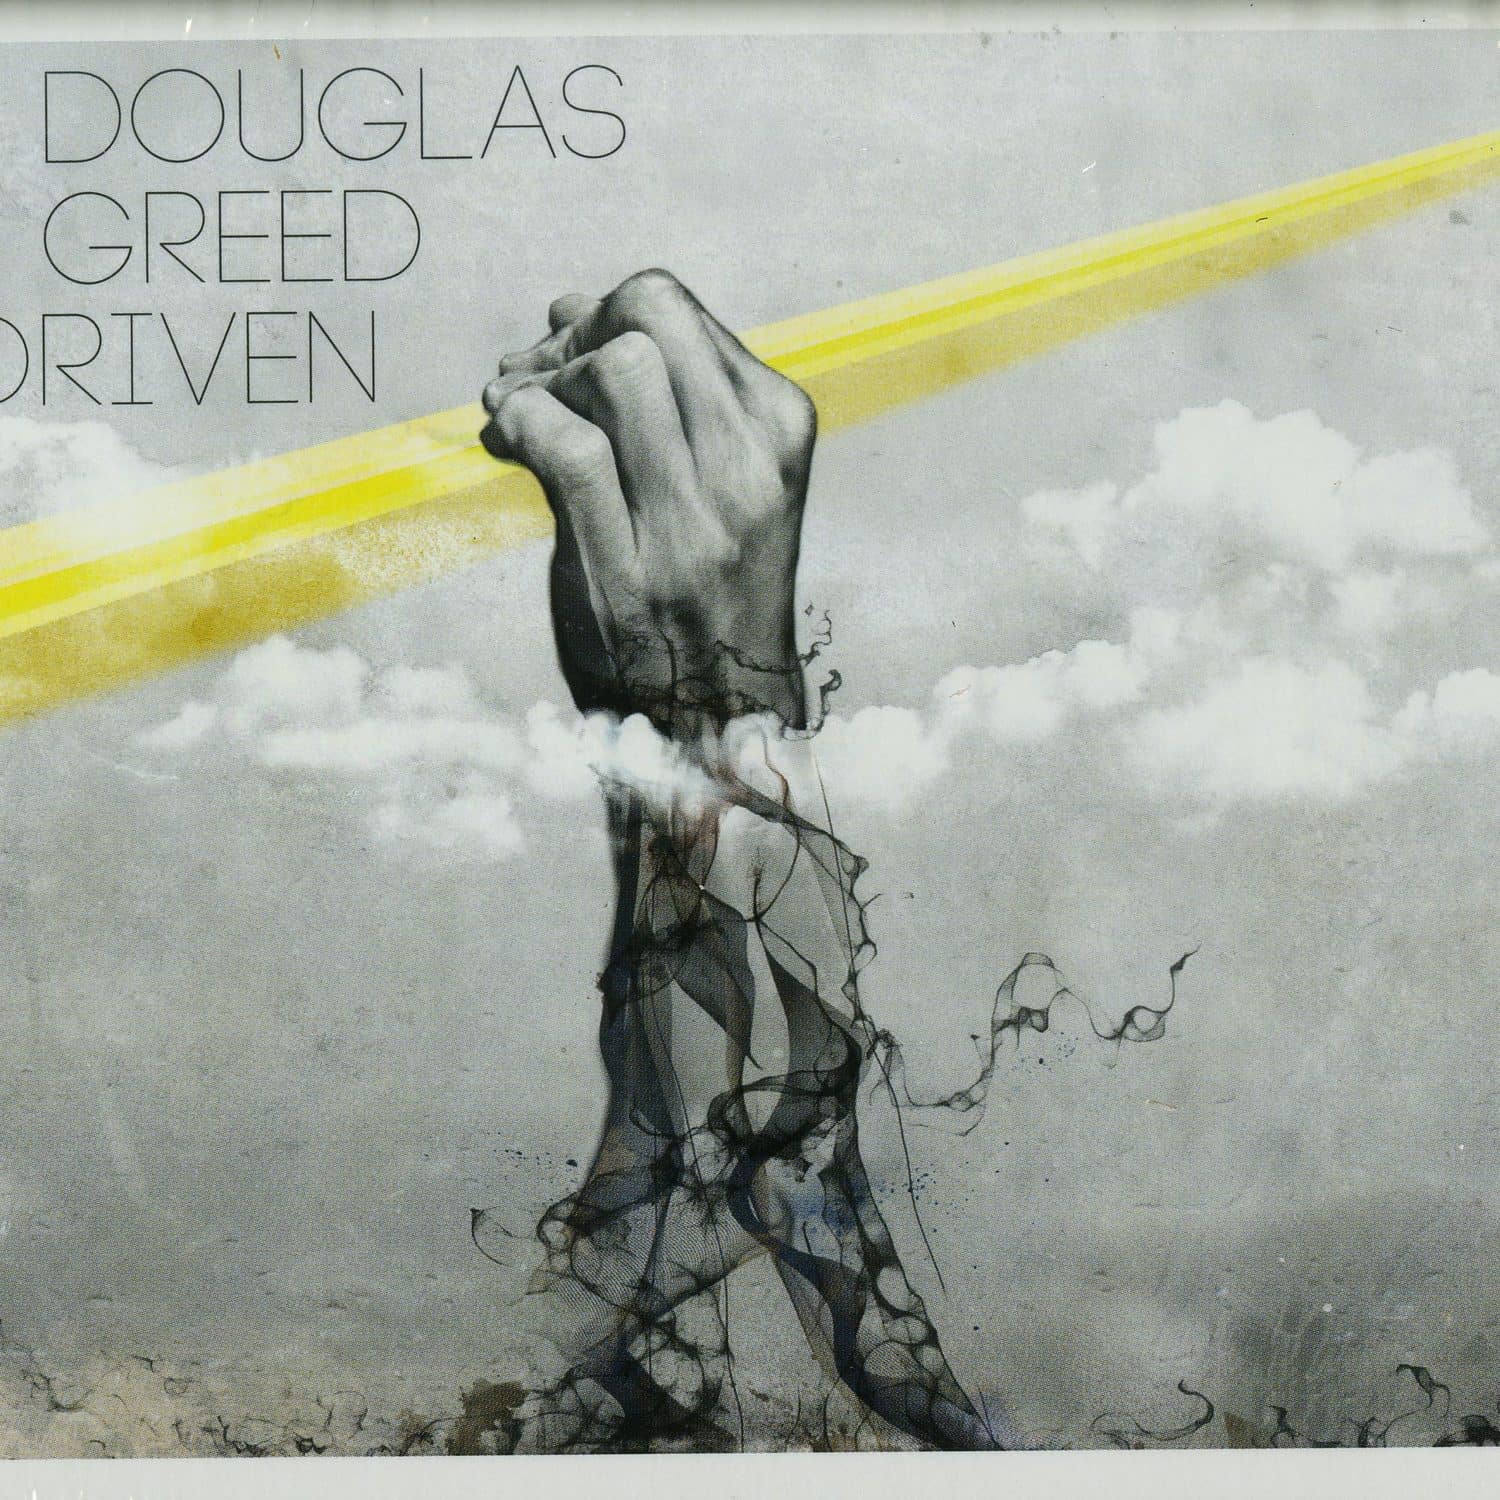 Douglas Greed - DRIVEN 